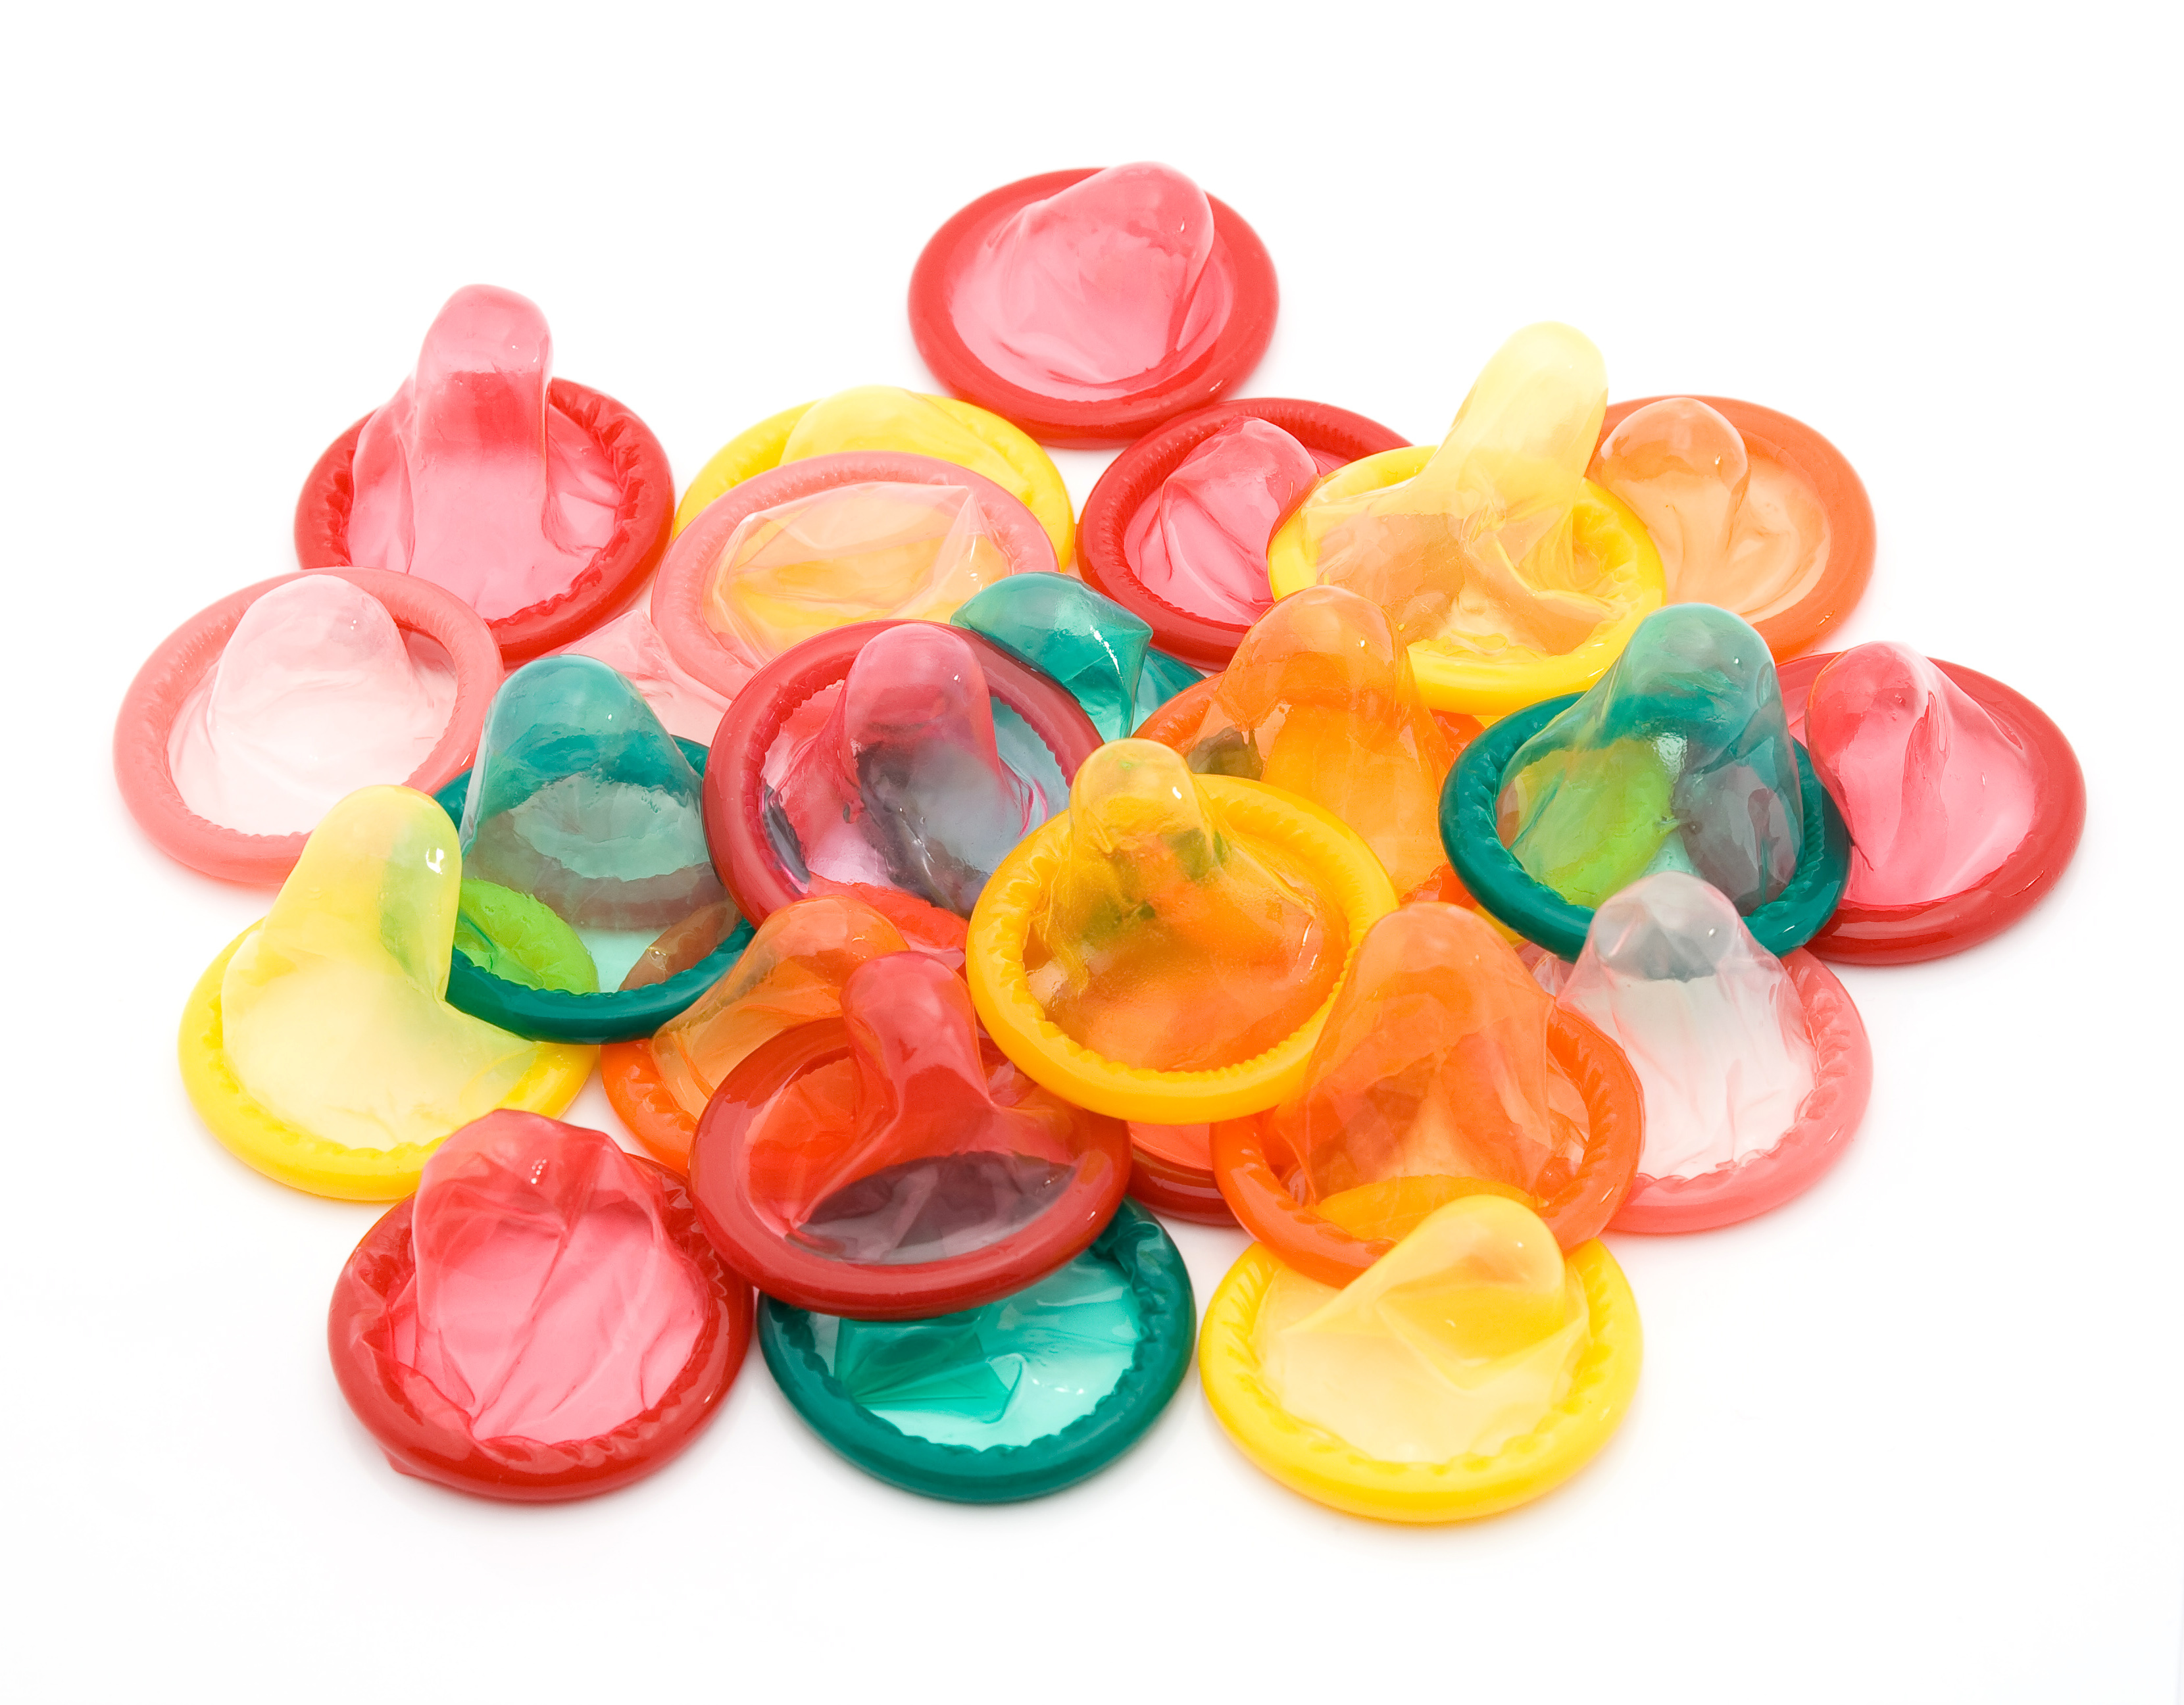 Condoms & birth control | University of Colorado OB-GYN